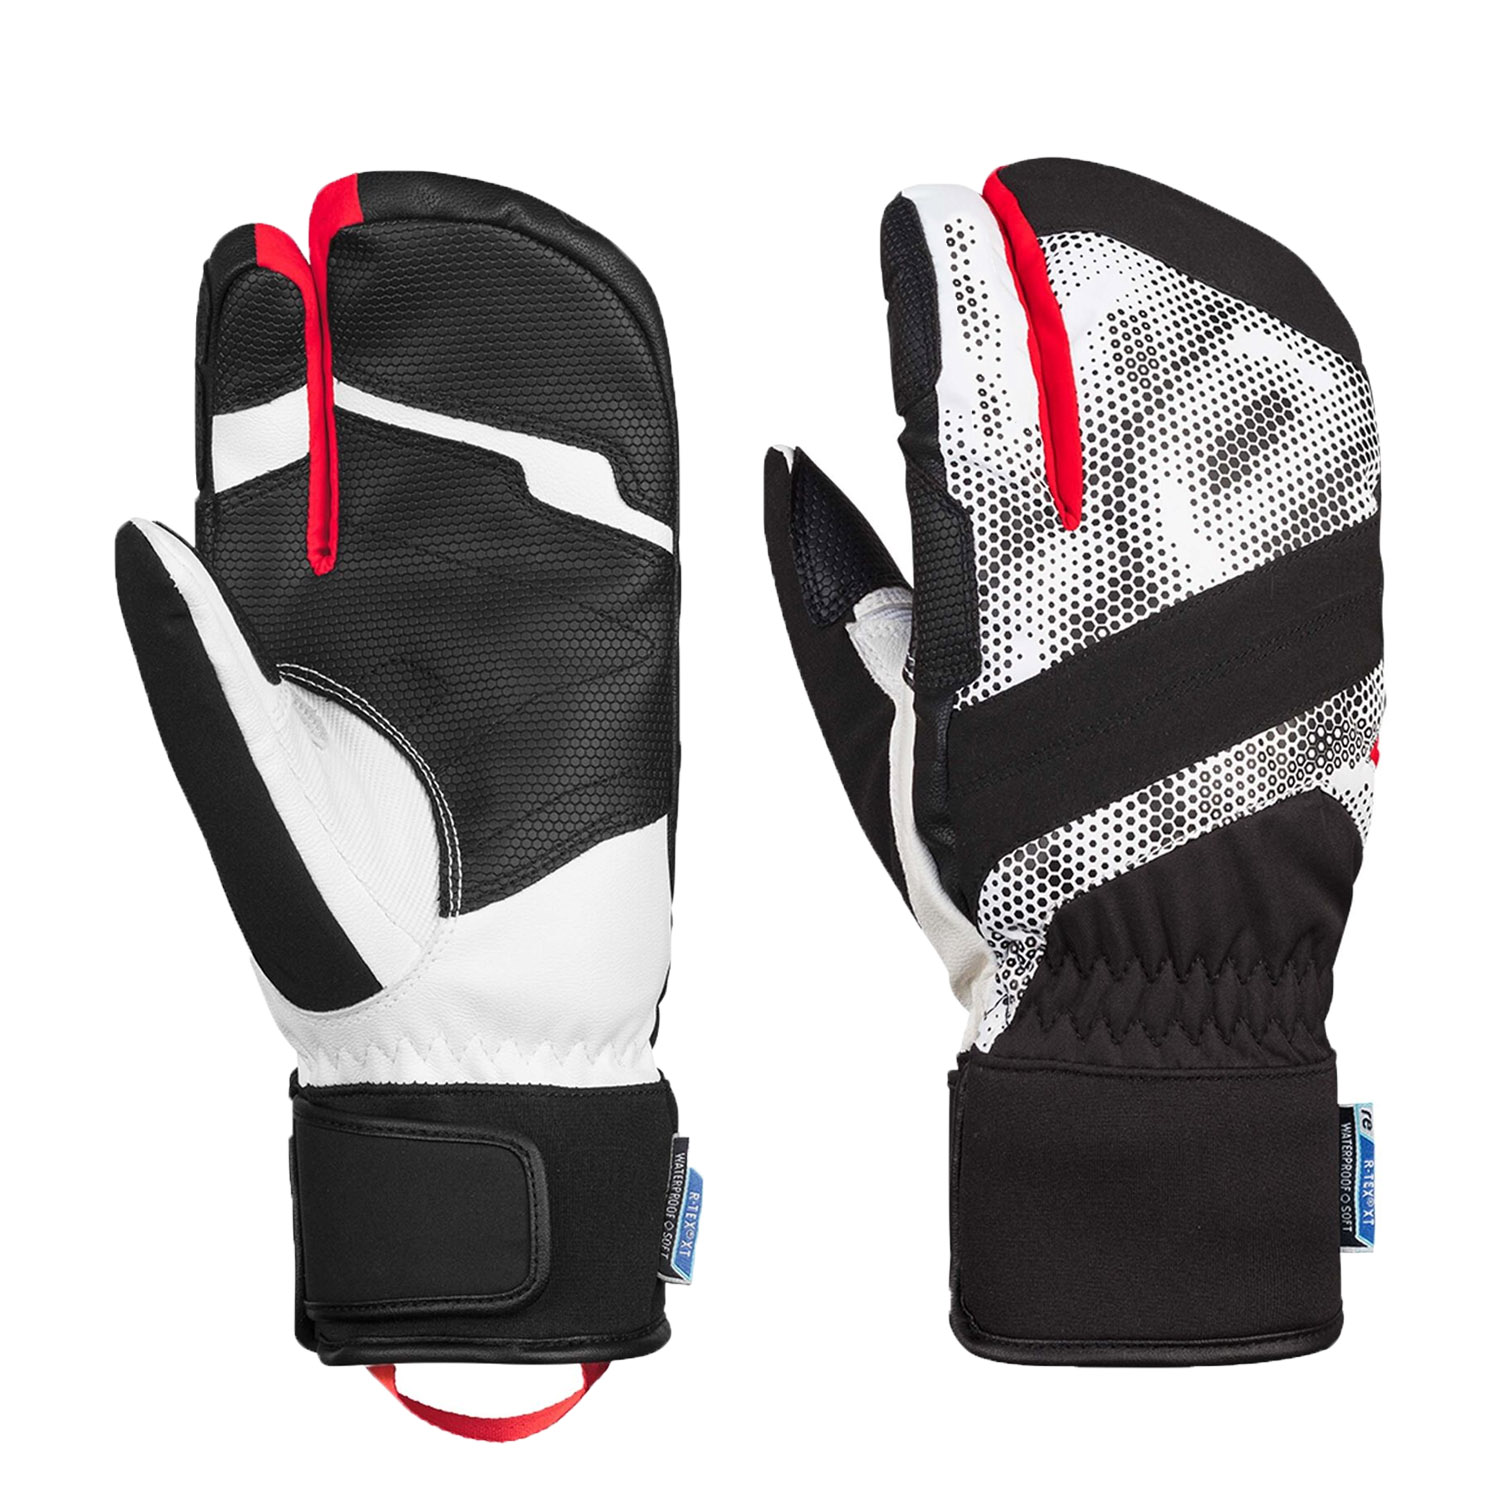 Outdoors Winter Waterproof Snow Ski Gloves For Men